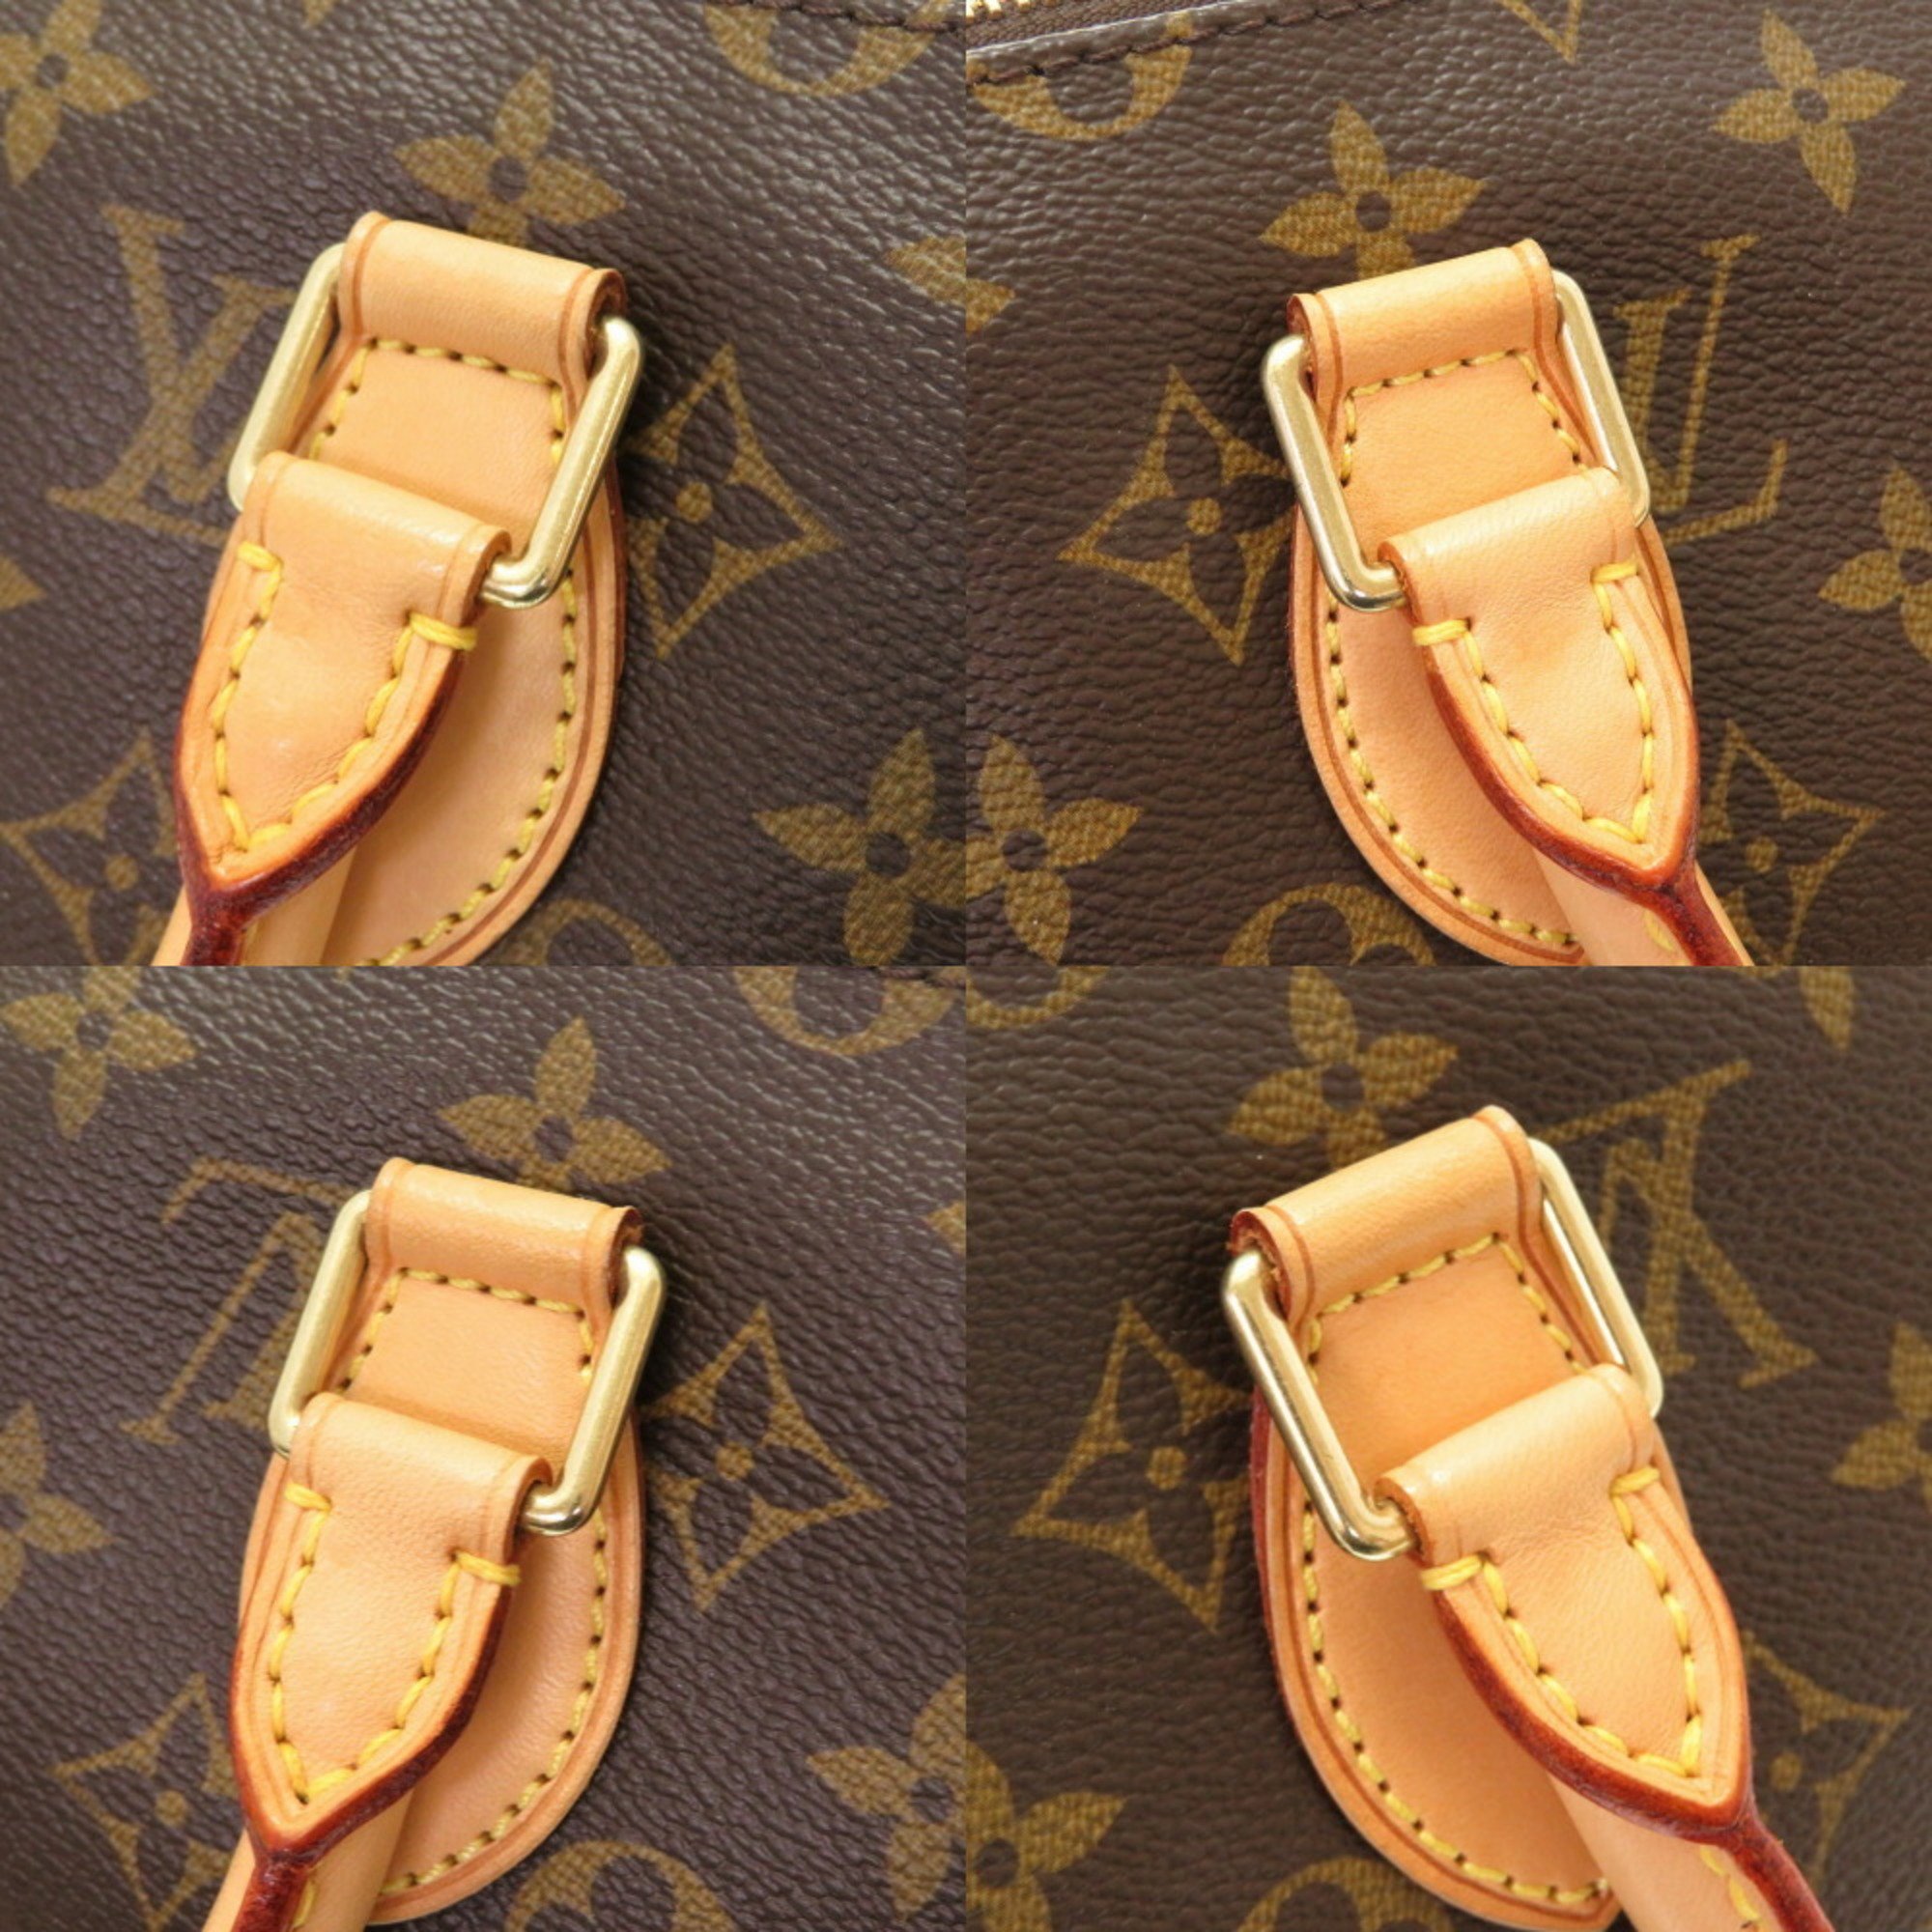 Louis Vuitton Monogram Popin Cool M40009 Handbag Bag LV 0337 LOUIS VUITTON